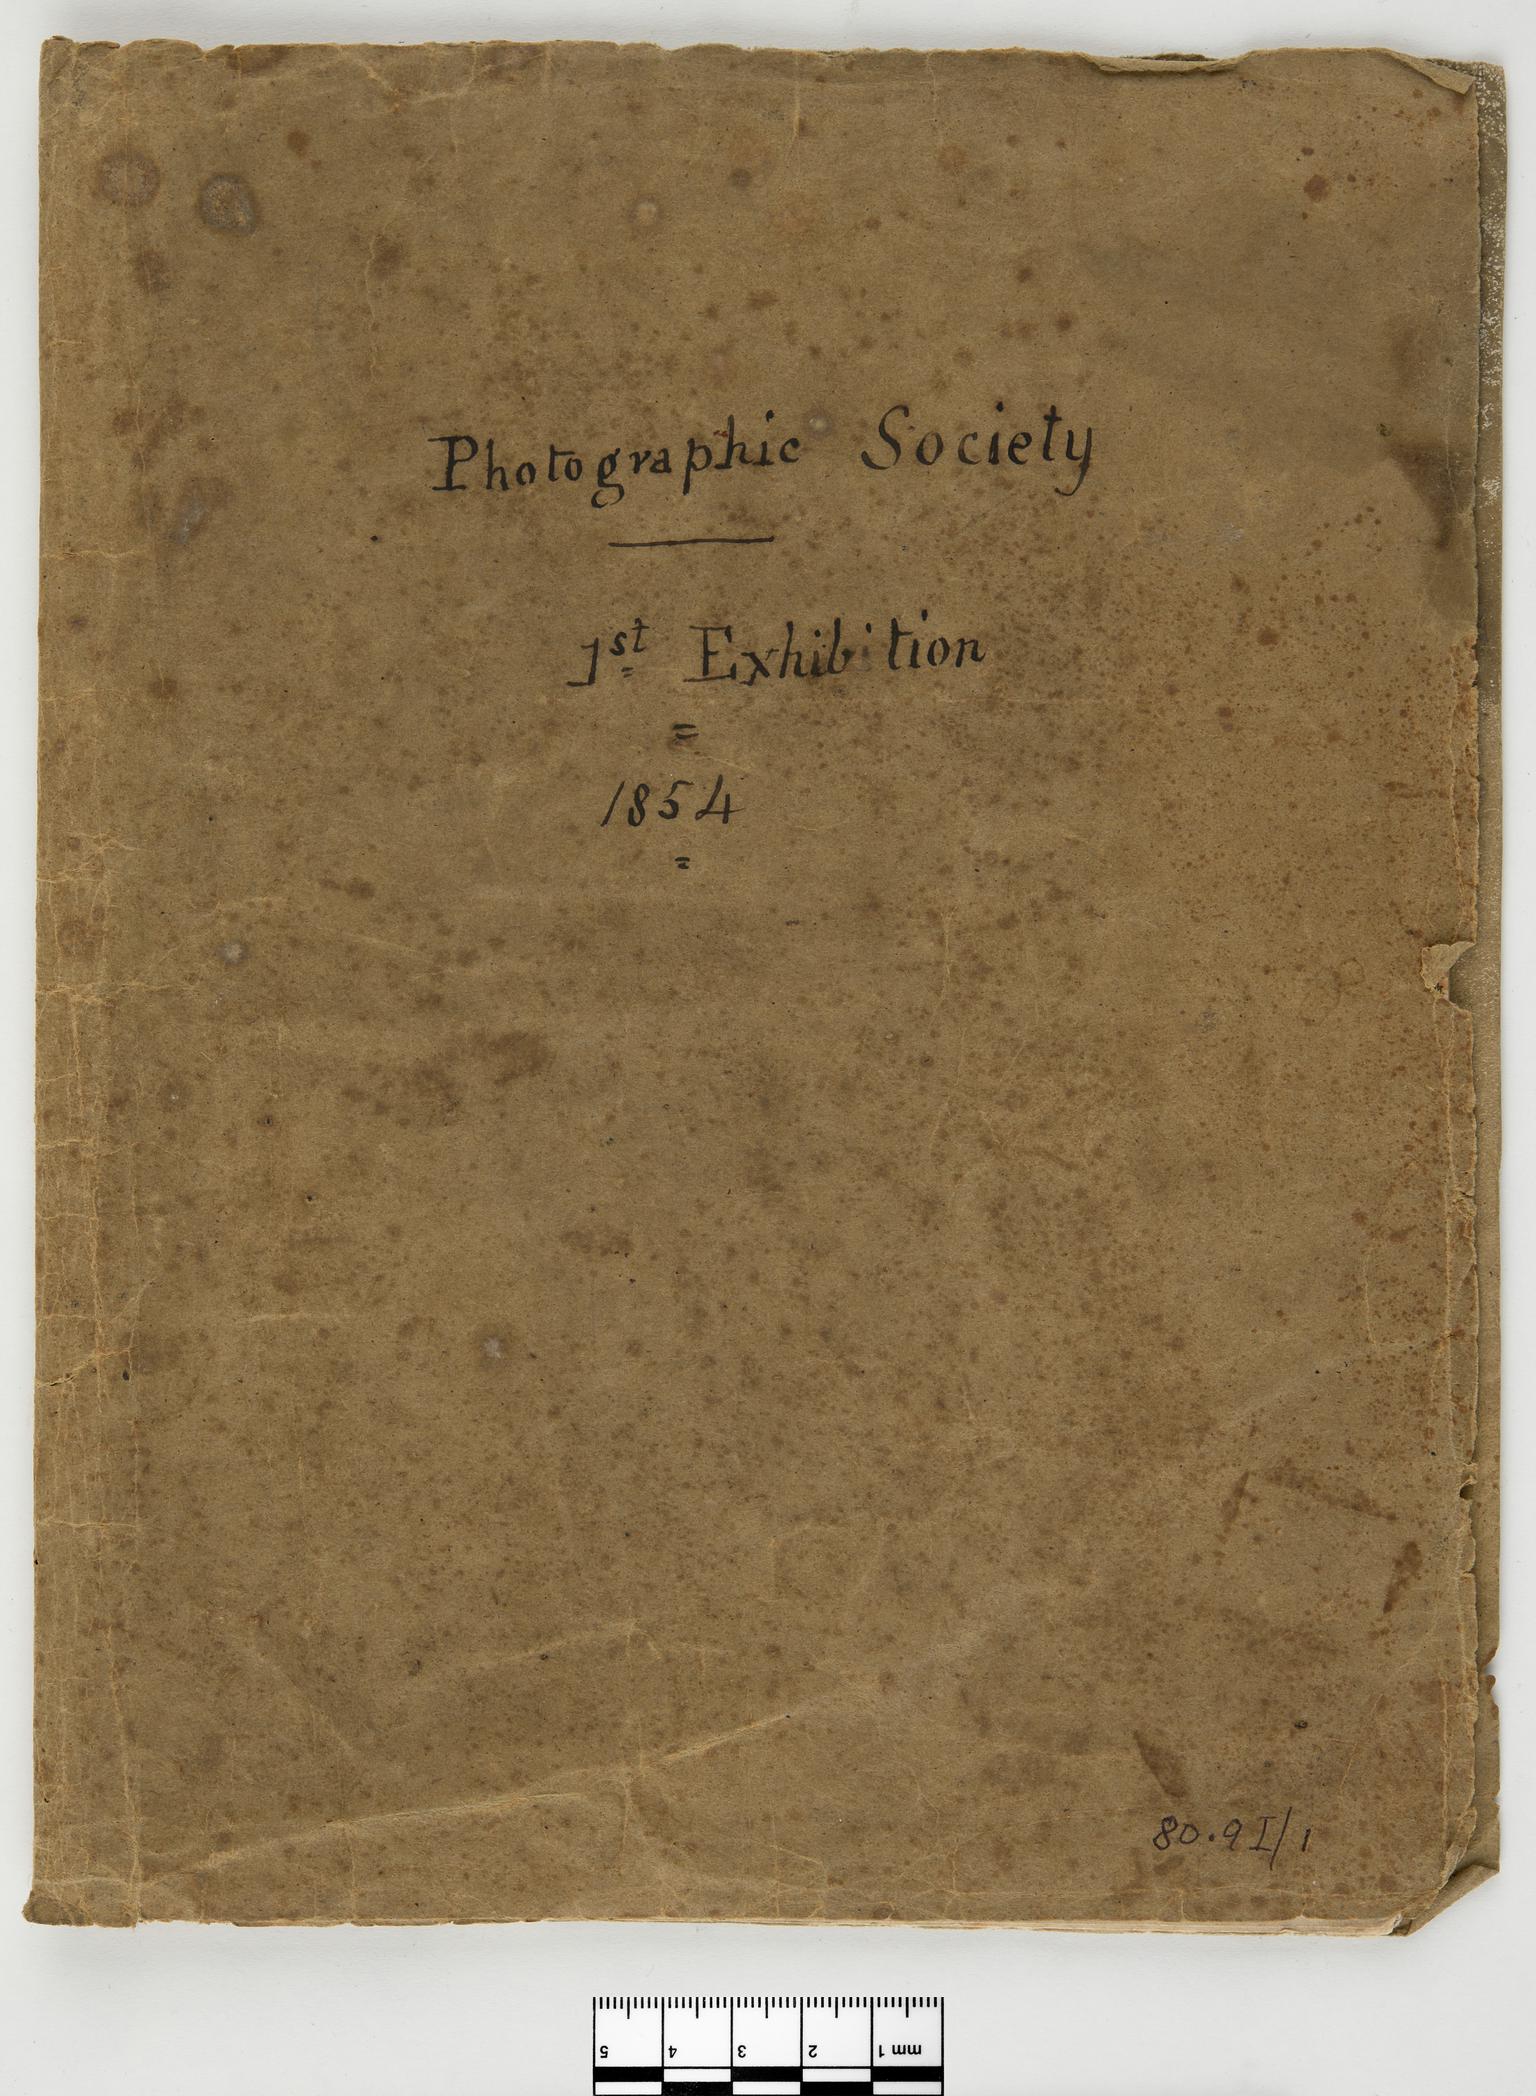 Photographic Society 1st Exhibition 1854 (catalogue)